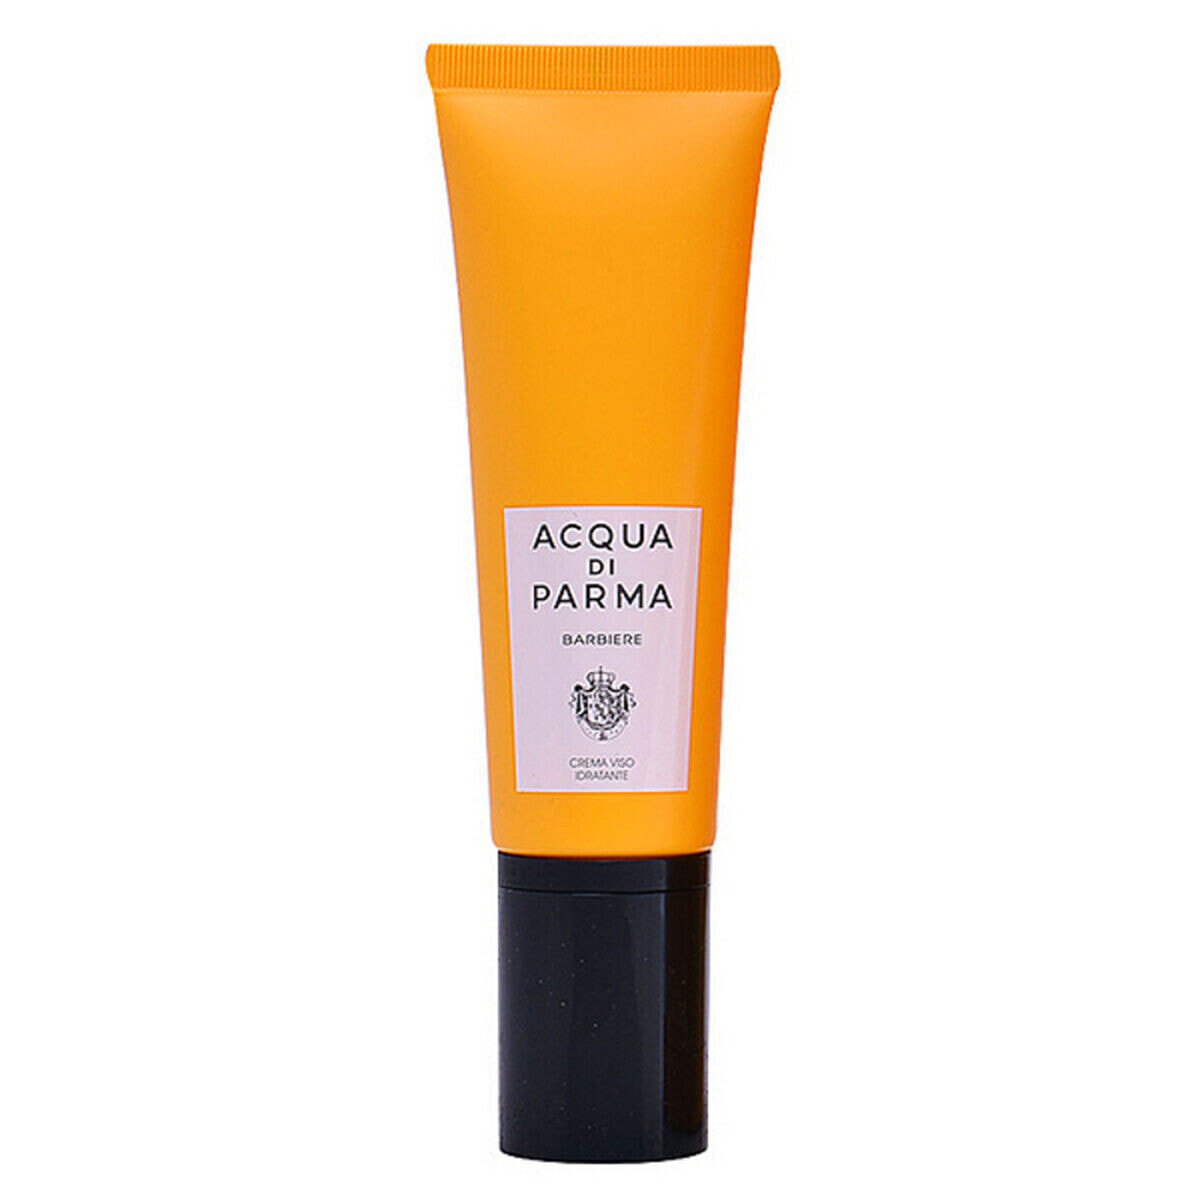 Acqua di Parma Barbiere Moisturizing Face Cream Увлажняющий крем для лица 50 мл